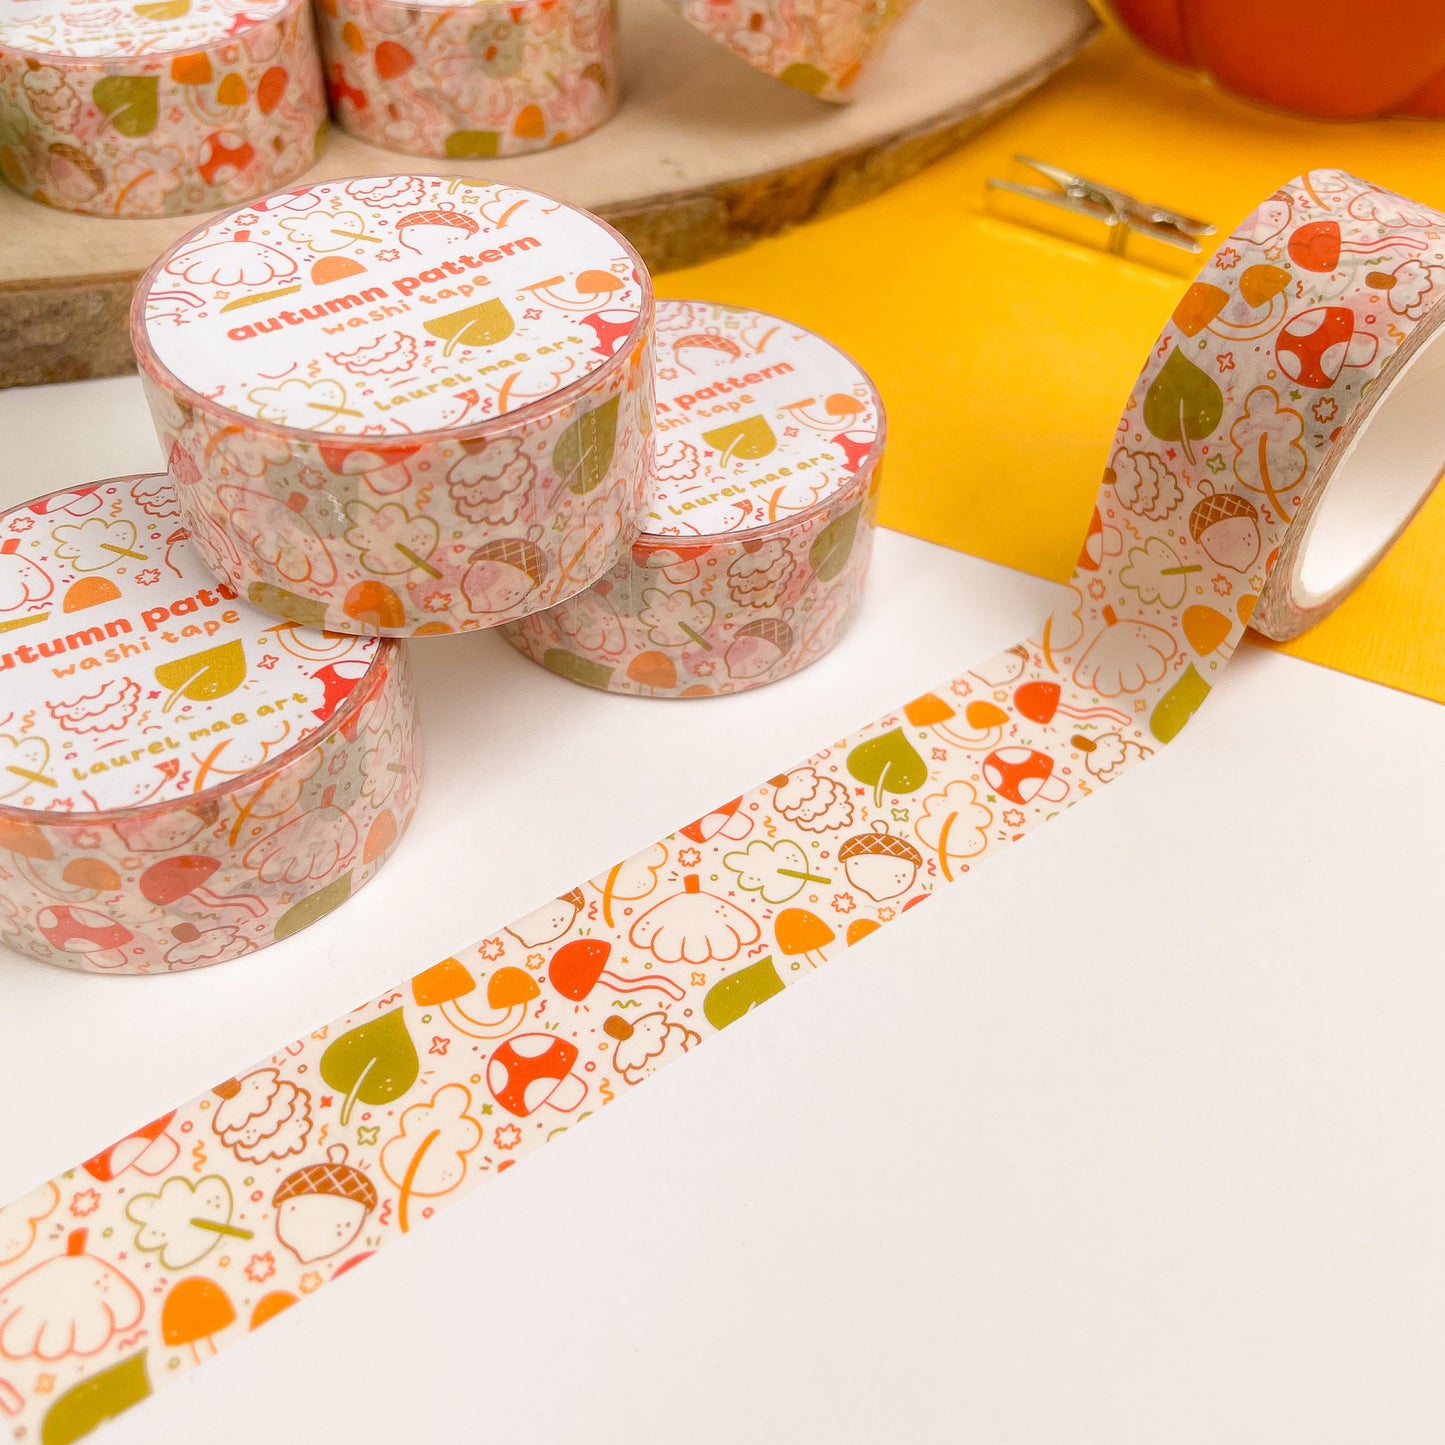 Autumn Pattern - Chunky Washi Tape